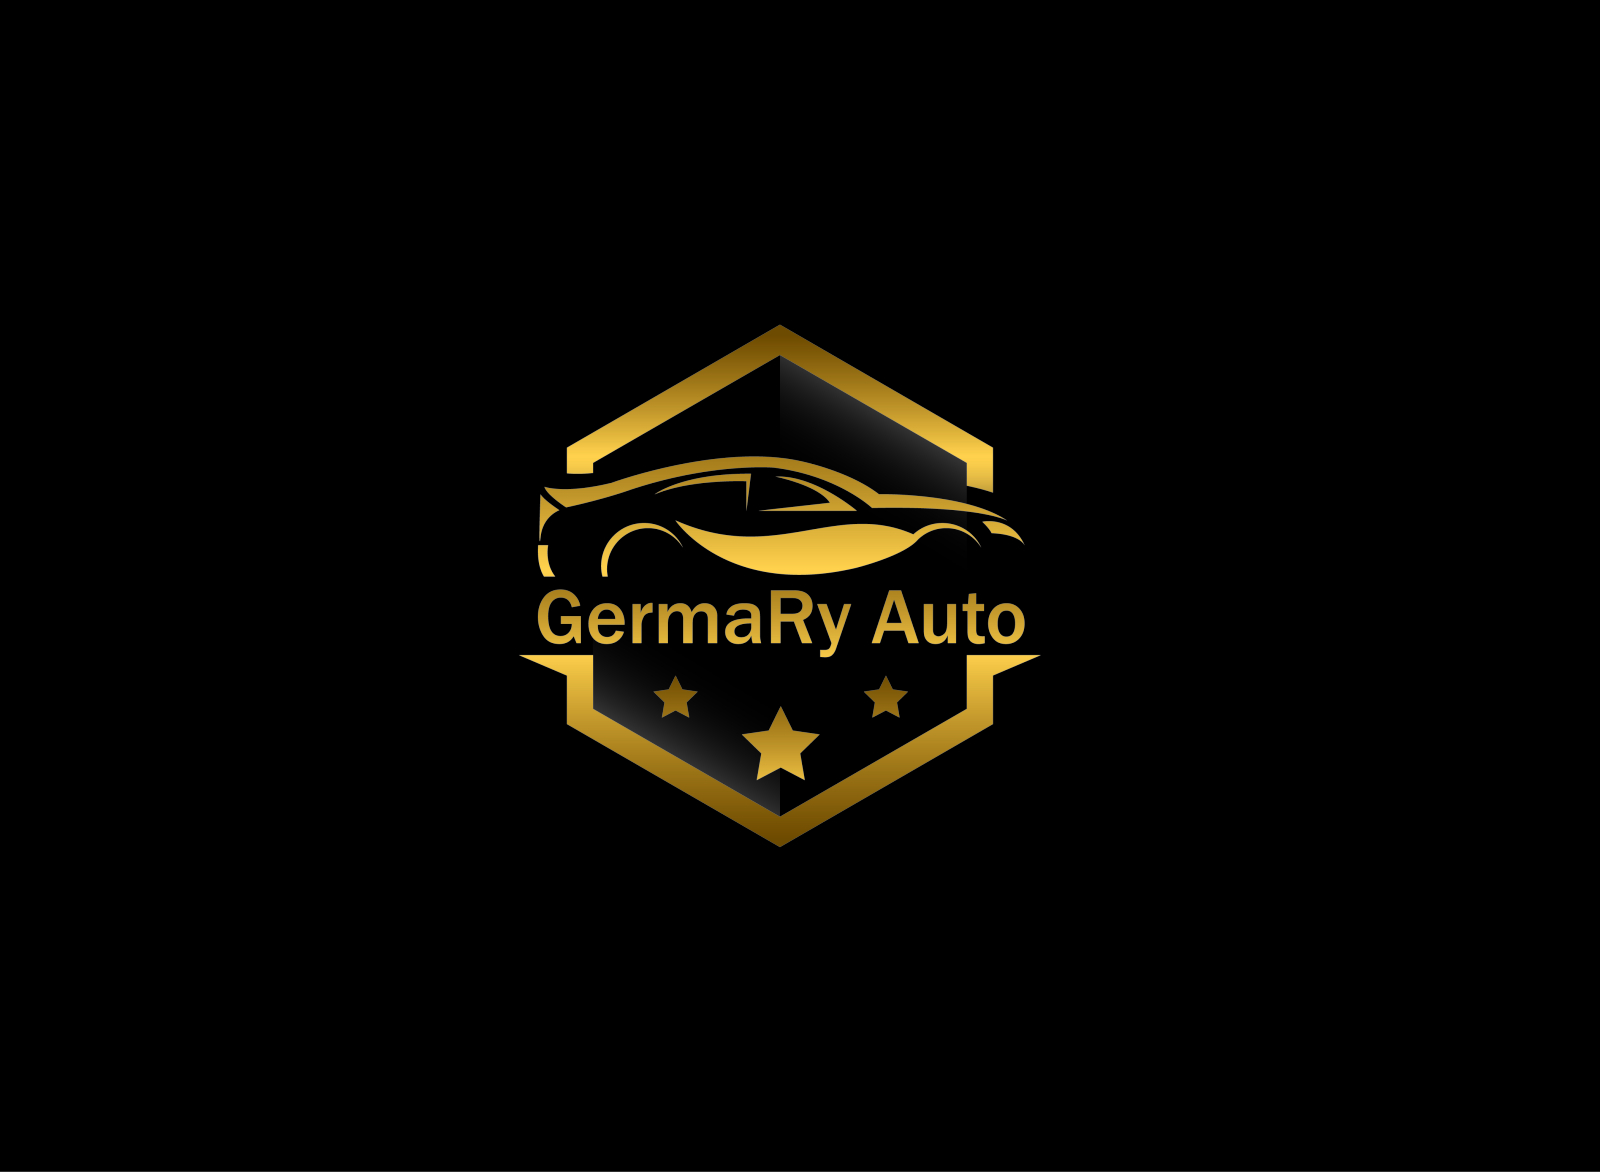 Luxury Car Company Logos